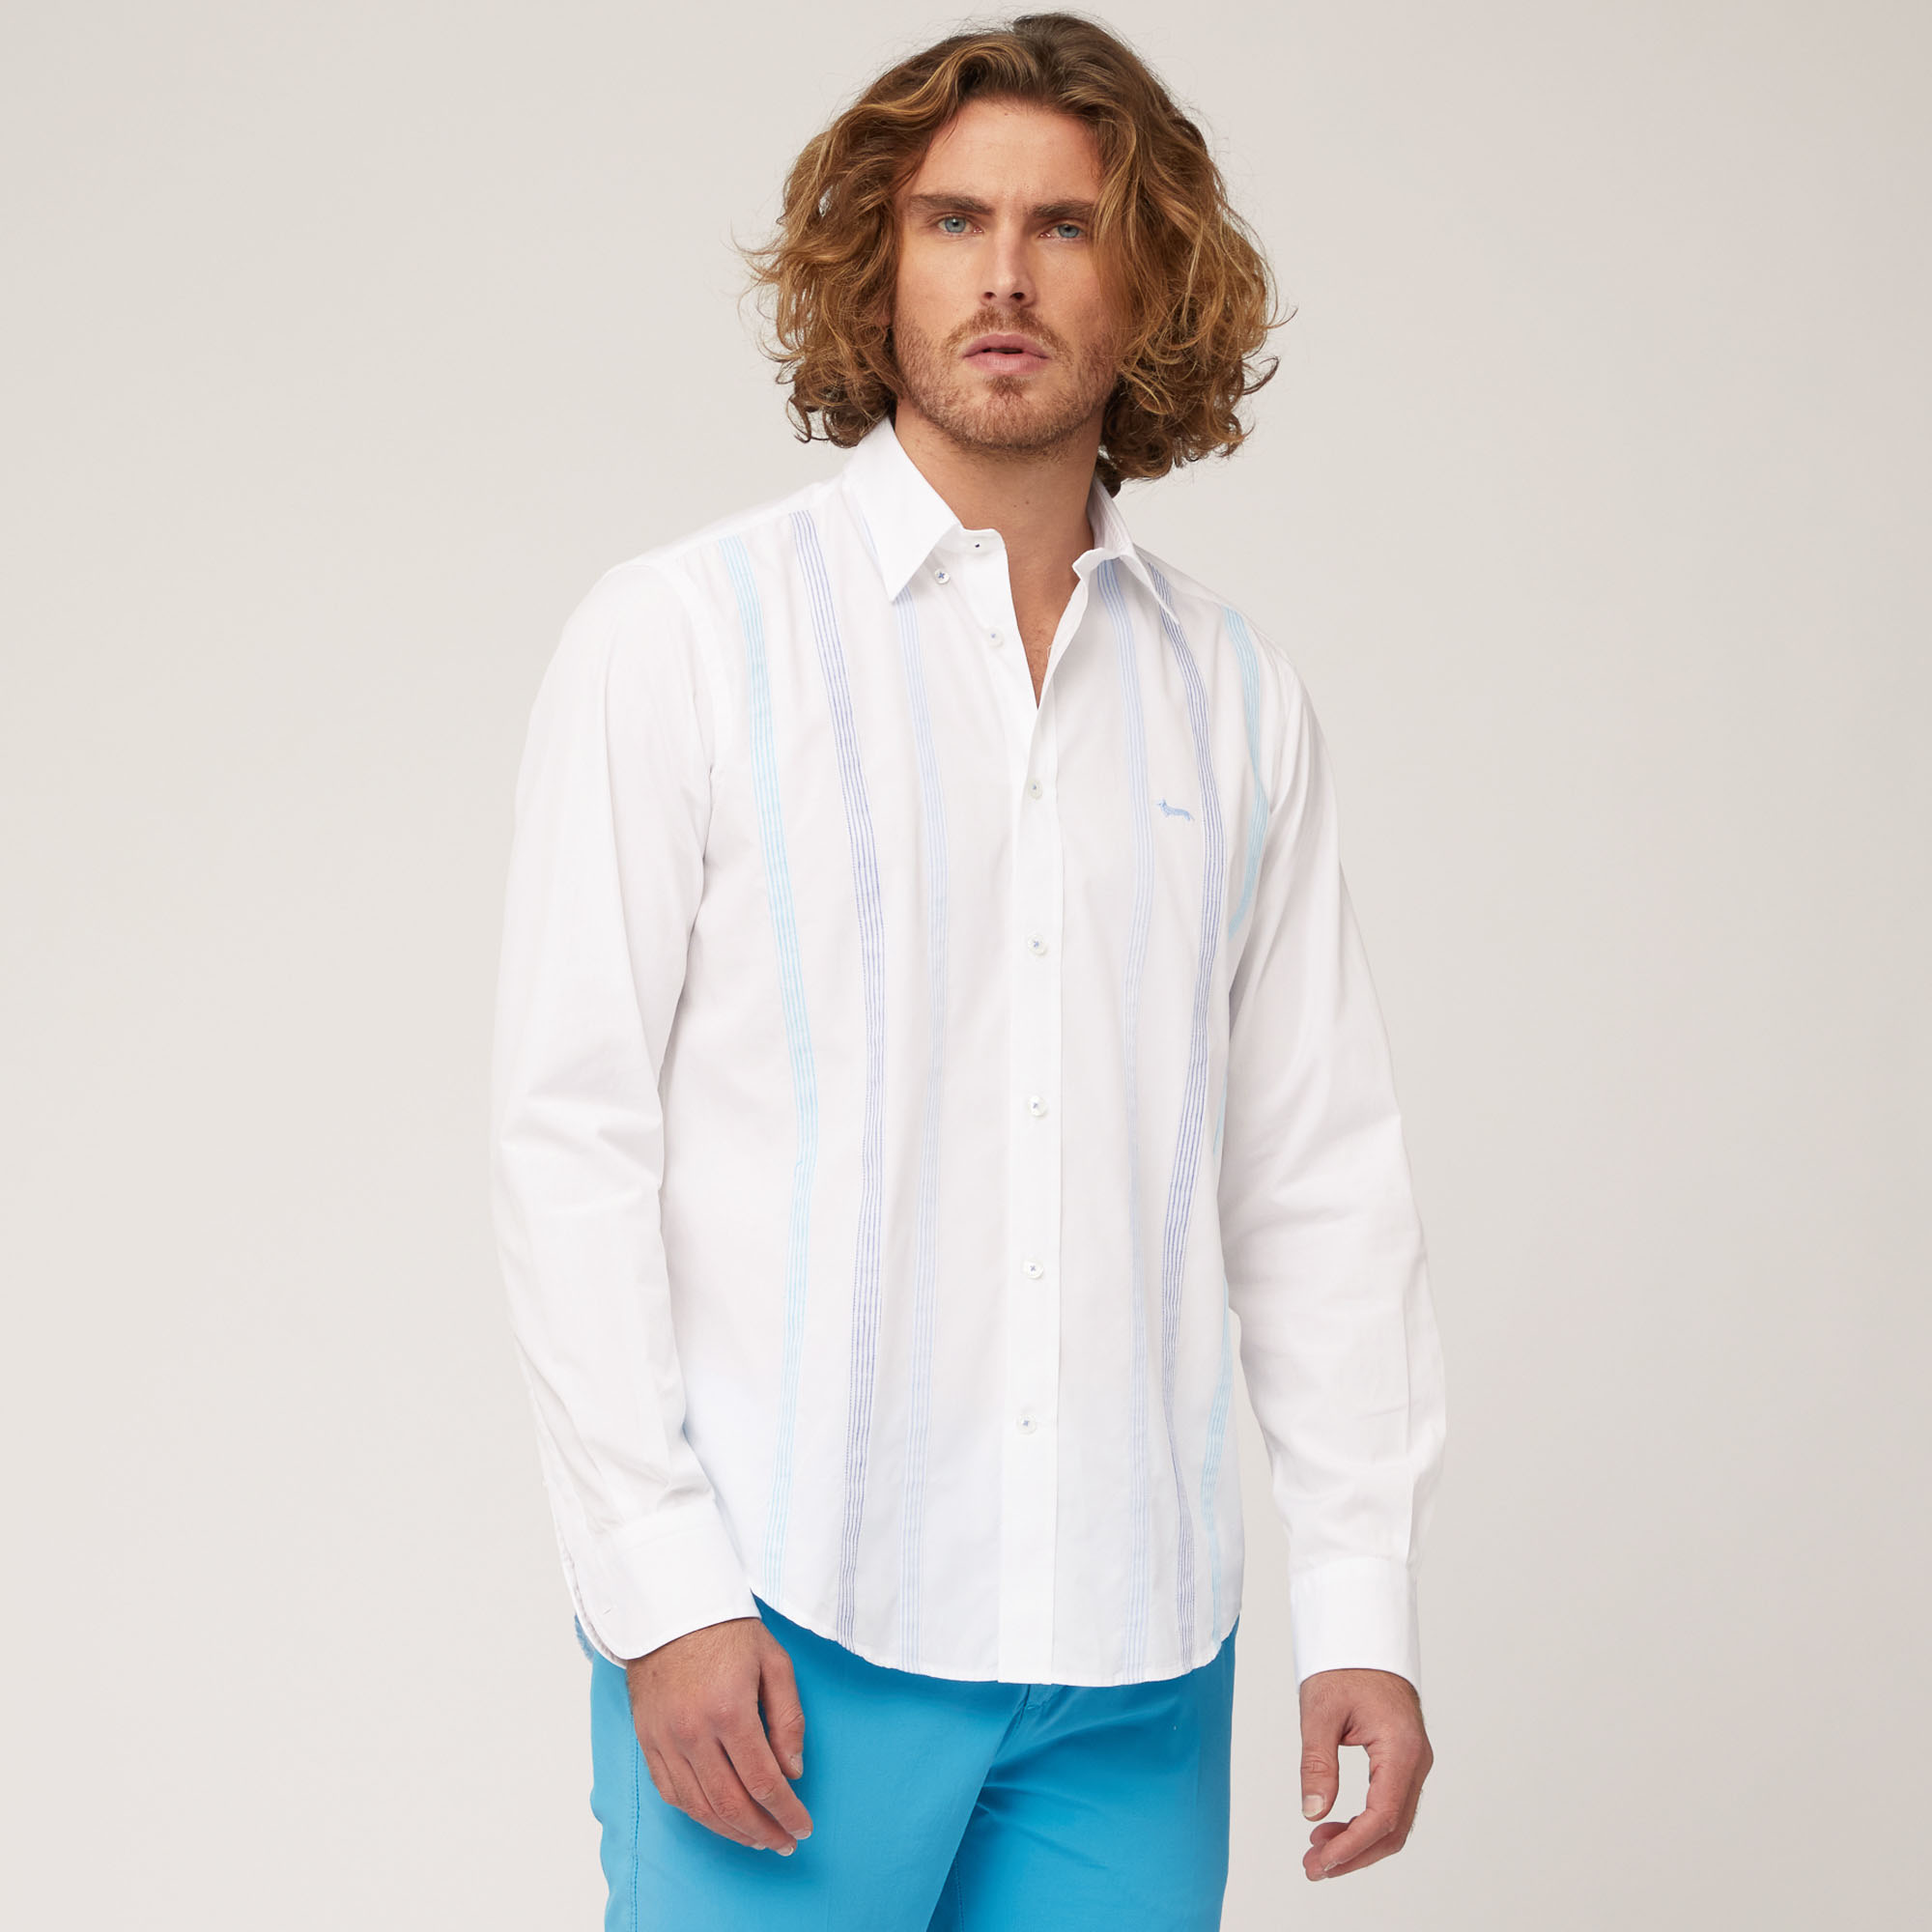 Camicia In Cotone Con Fasce Rigate, Bianco, large image number 0